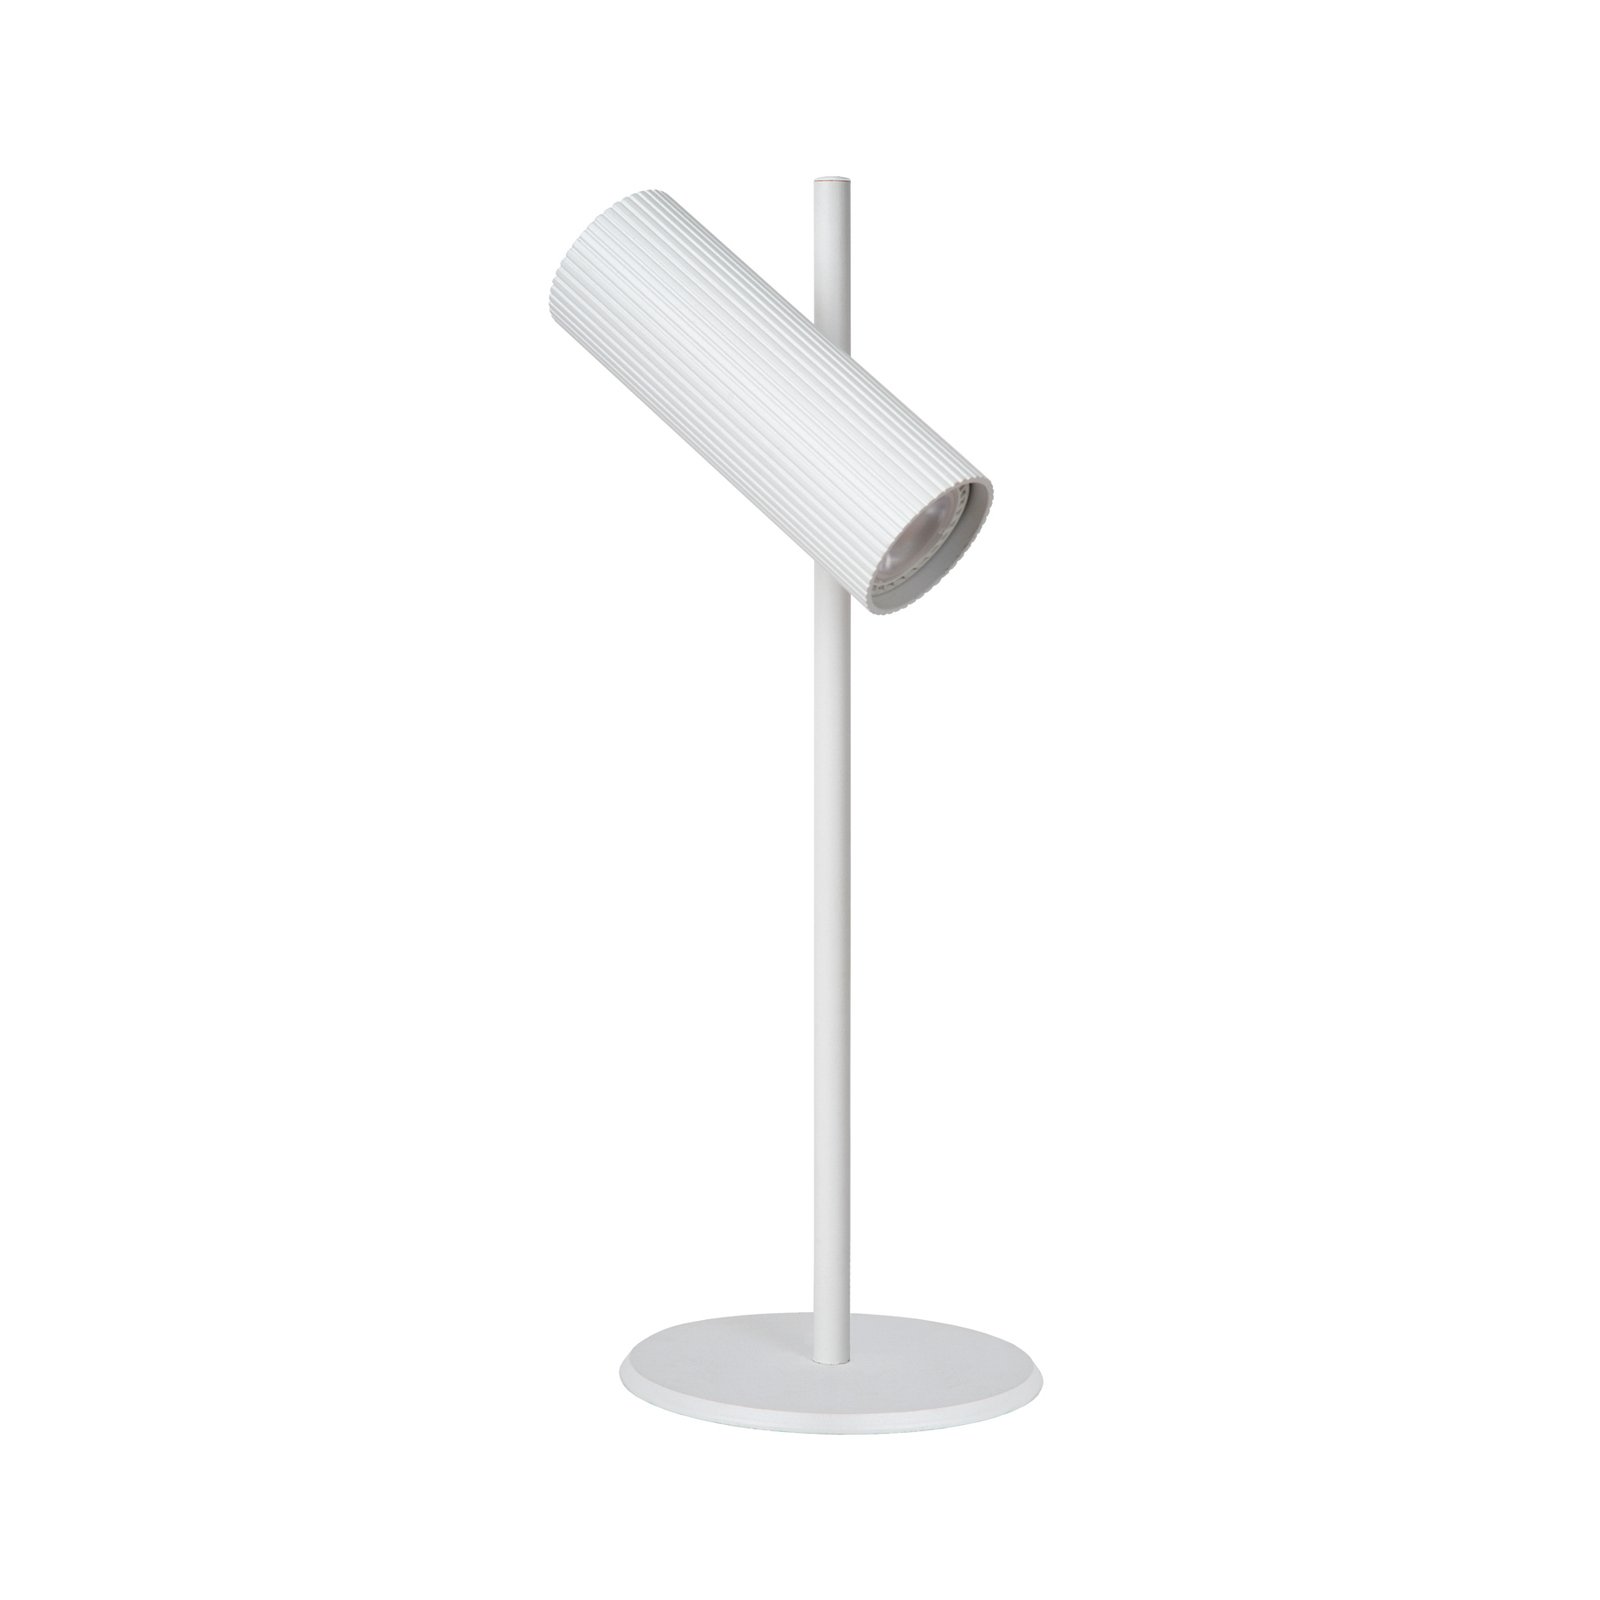 Lampe de table Clubs pivotante inclinable blanche